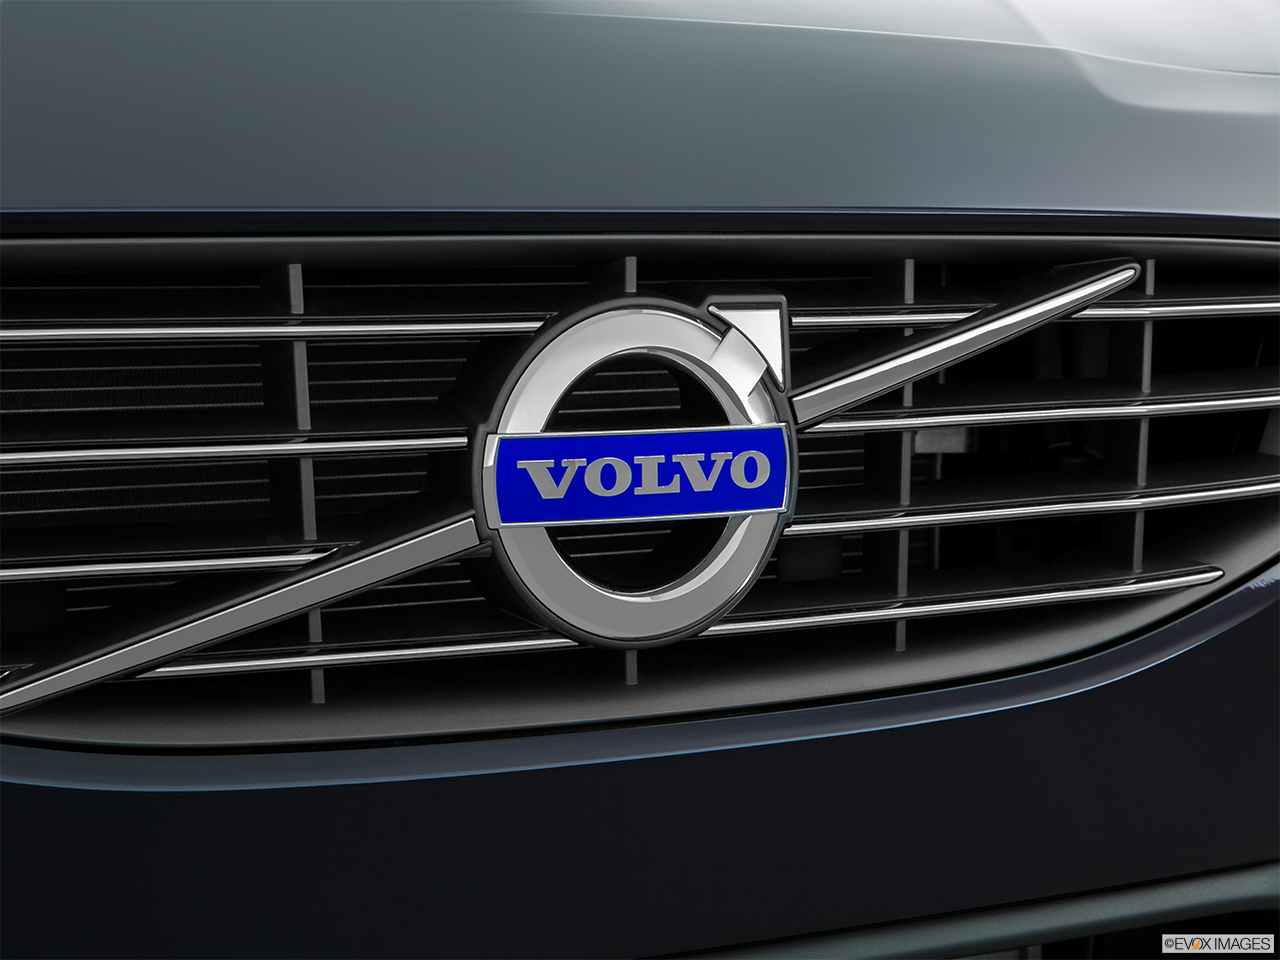 2016 Volvo S60 T5 Drive-E FWD Premier Exterior Bonus Shots (no set spec) 